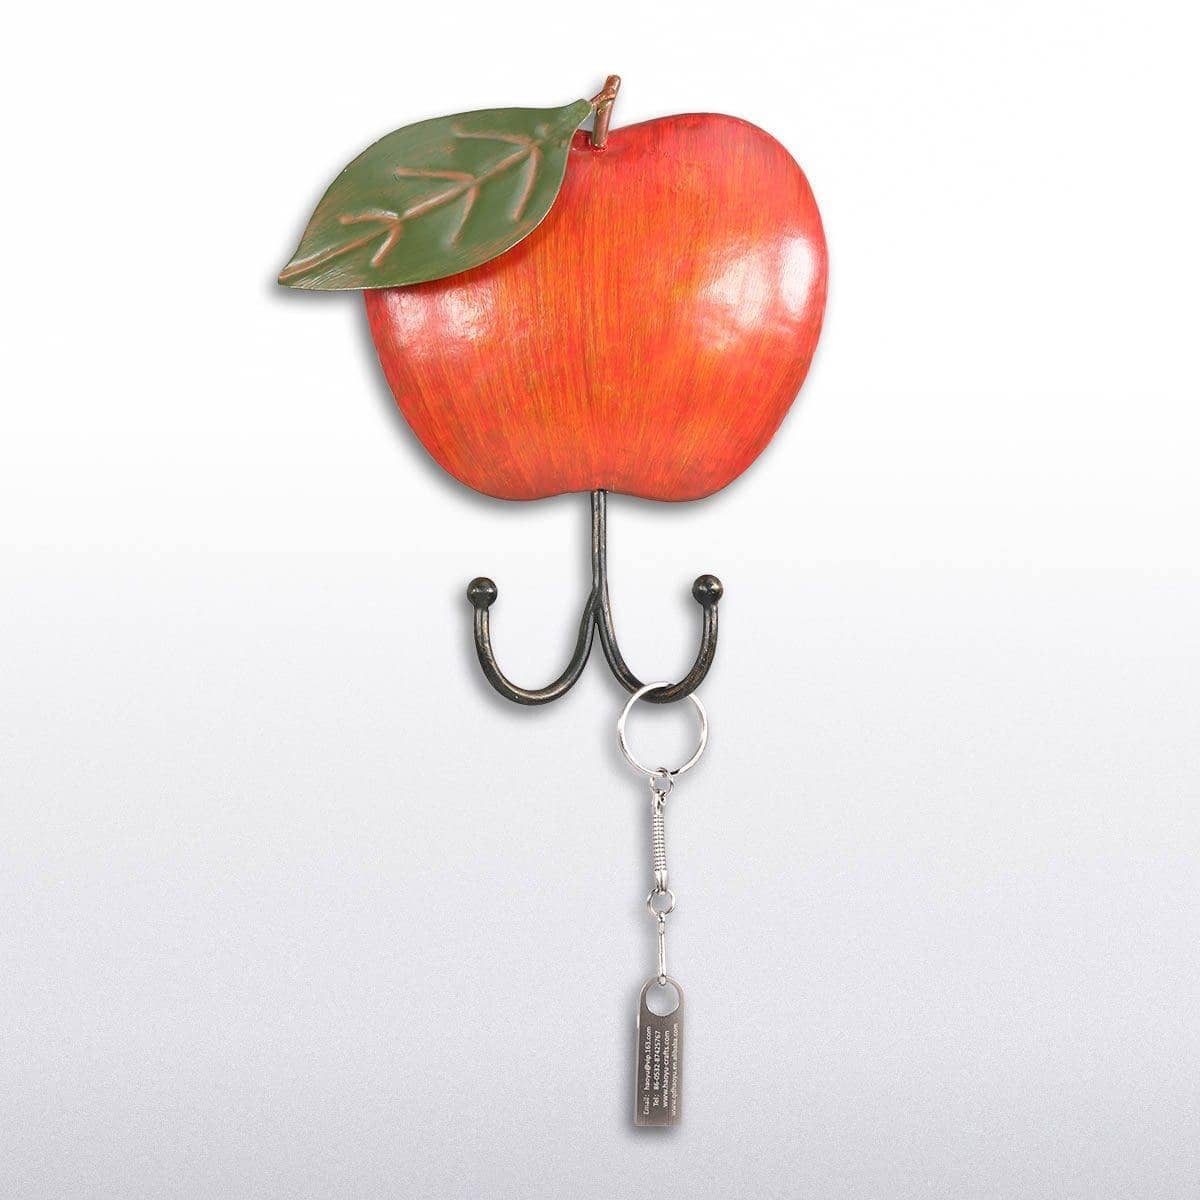 Apple Key Holder Wall Rack - Fun and Functional Home Organization